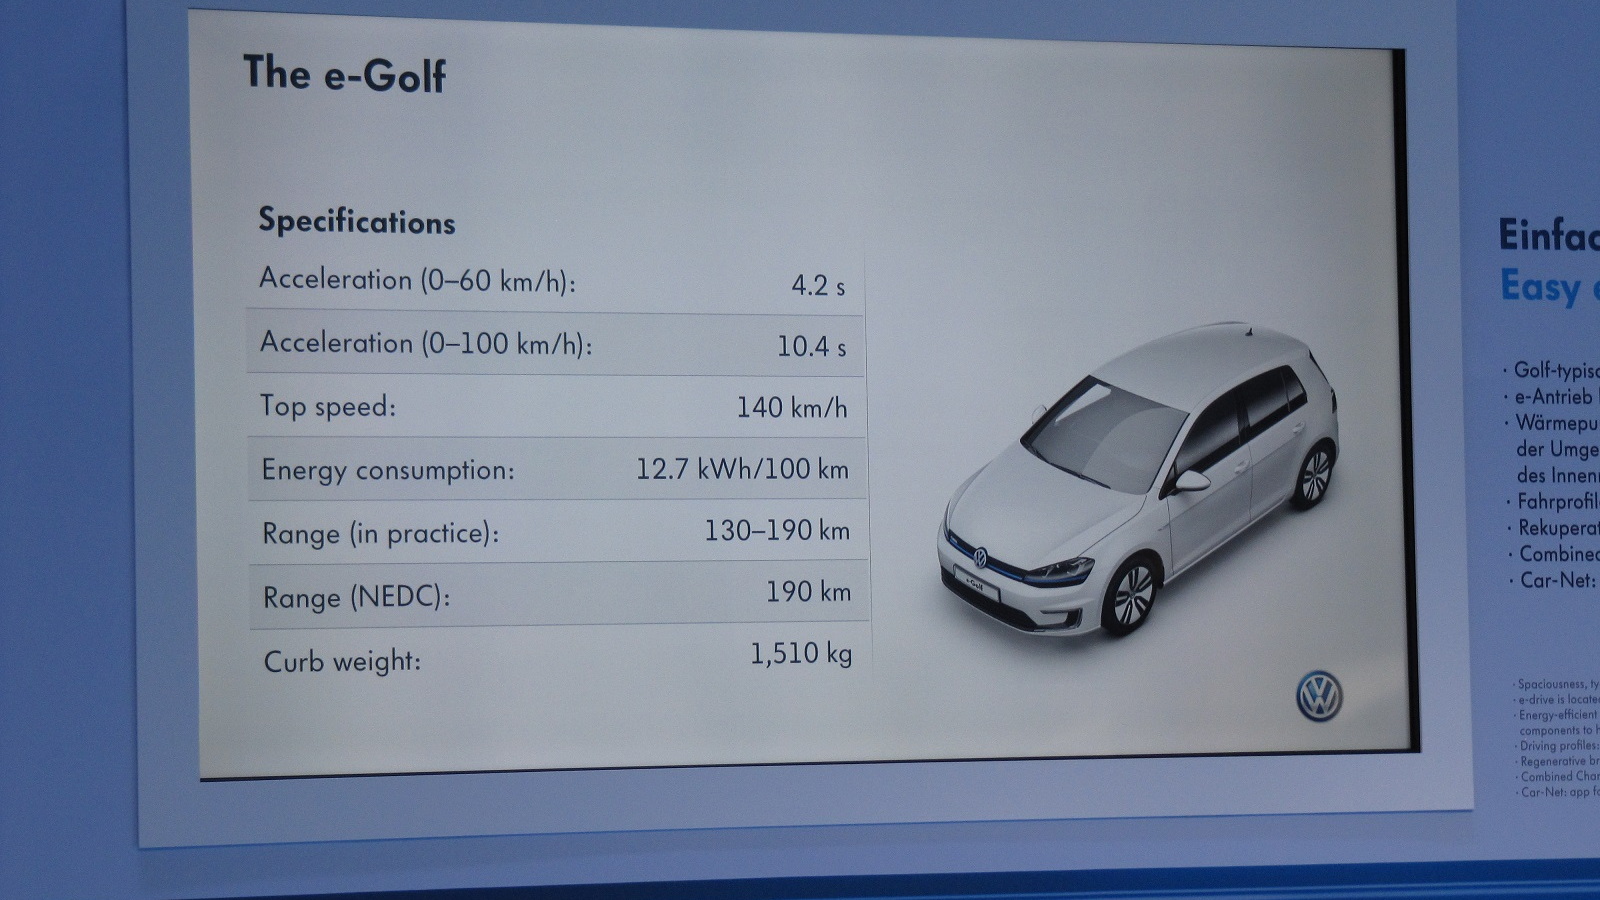 Volkswagen e-Golf (European model) test drive, Berlin, March 2014